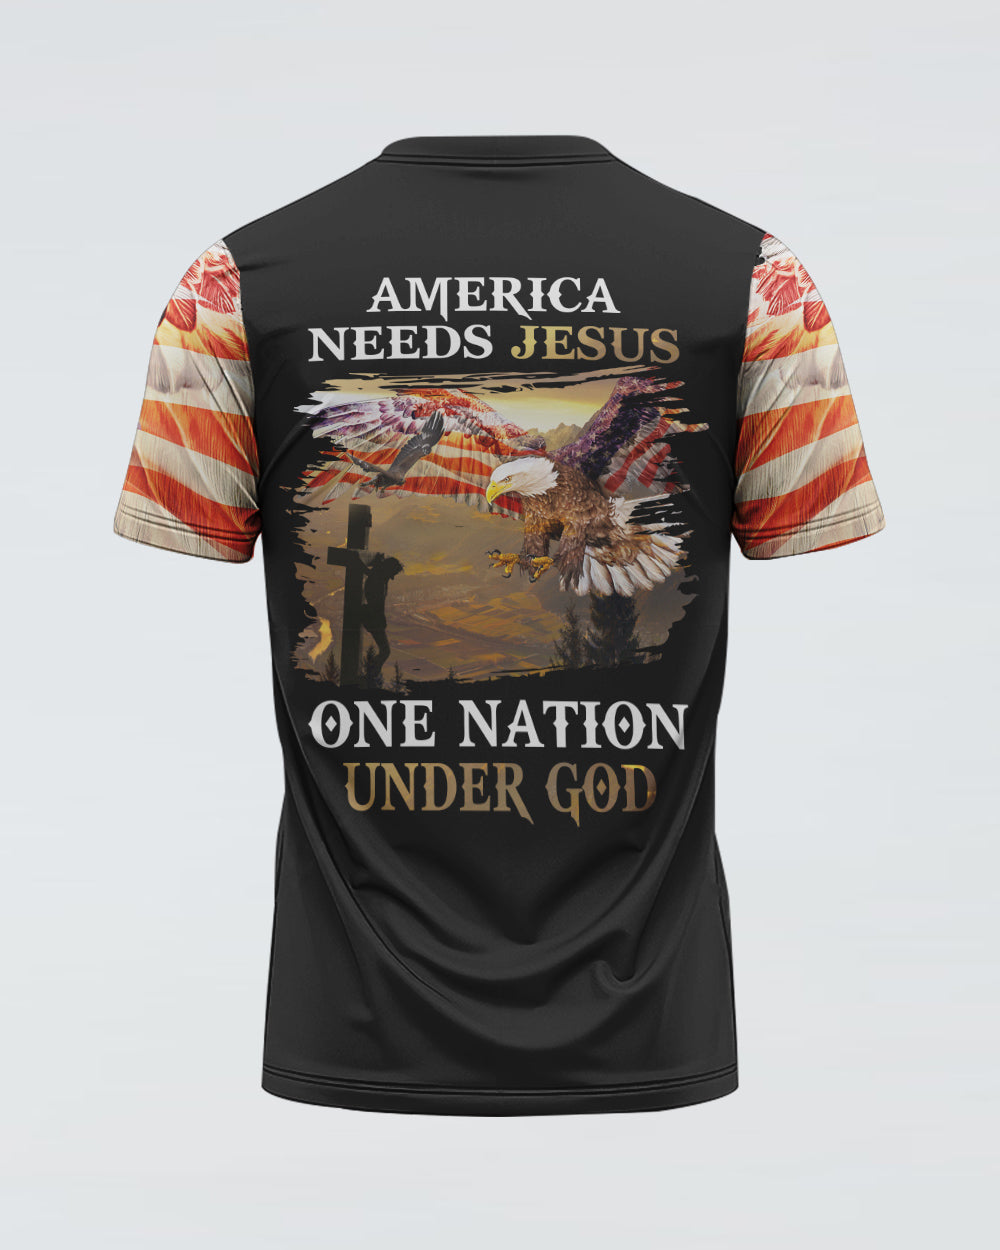 America Needs Jesus One Nation Under God Women's Christian Tshirt